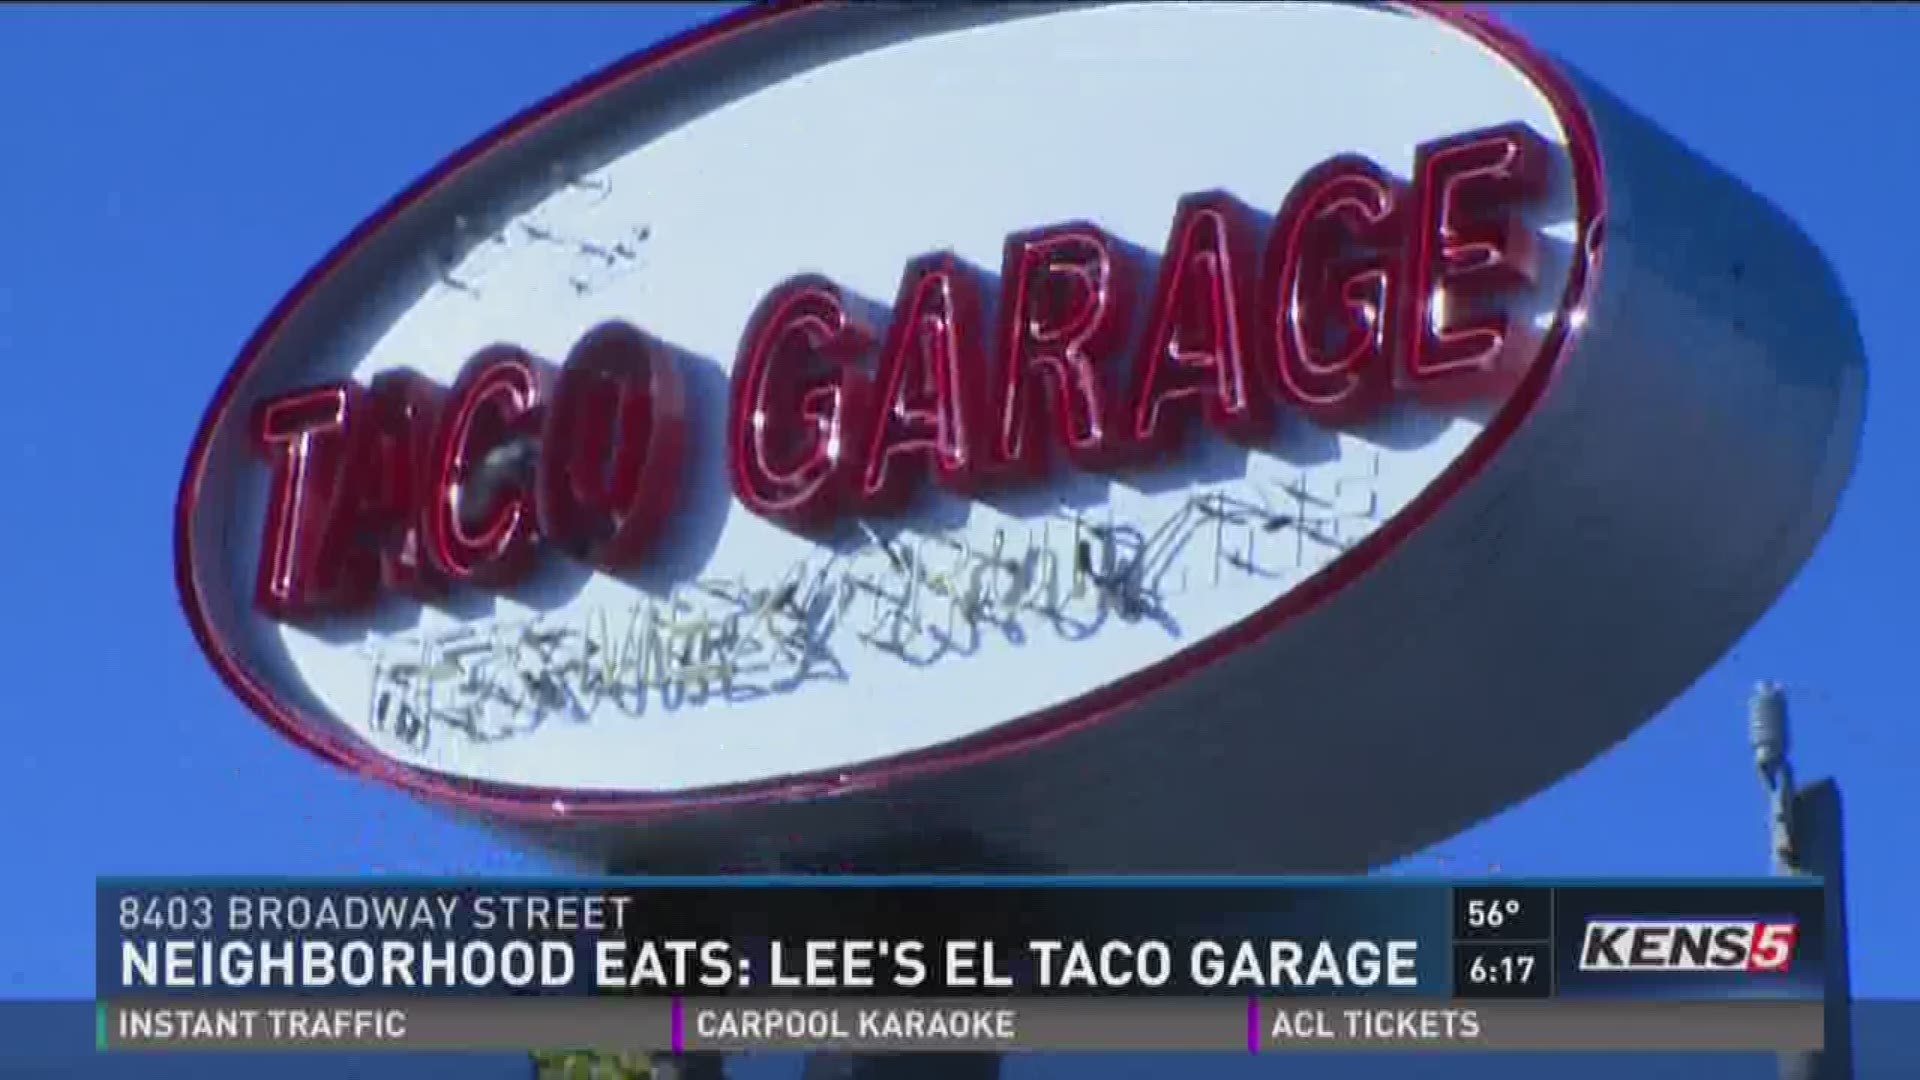 Neighborhood Eats: Lee's El Taco Garage